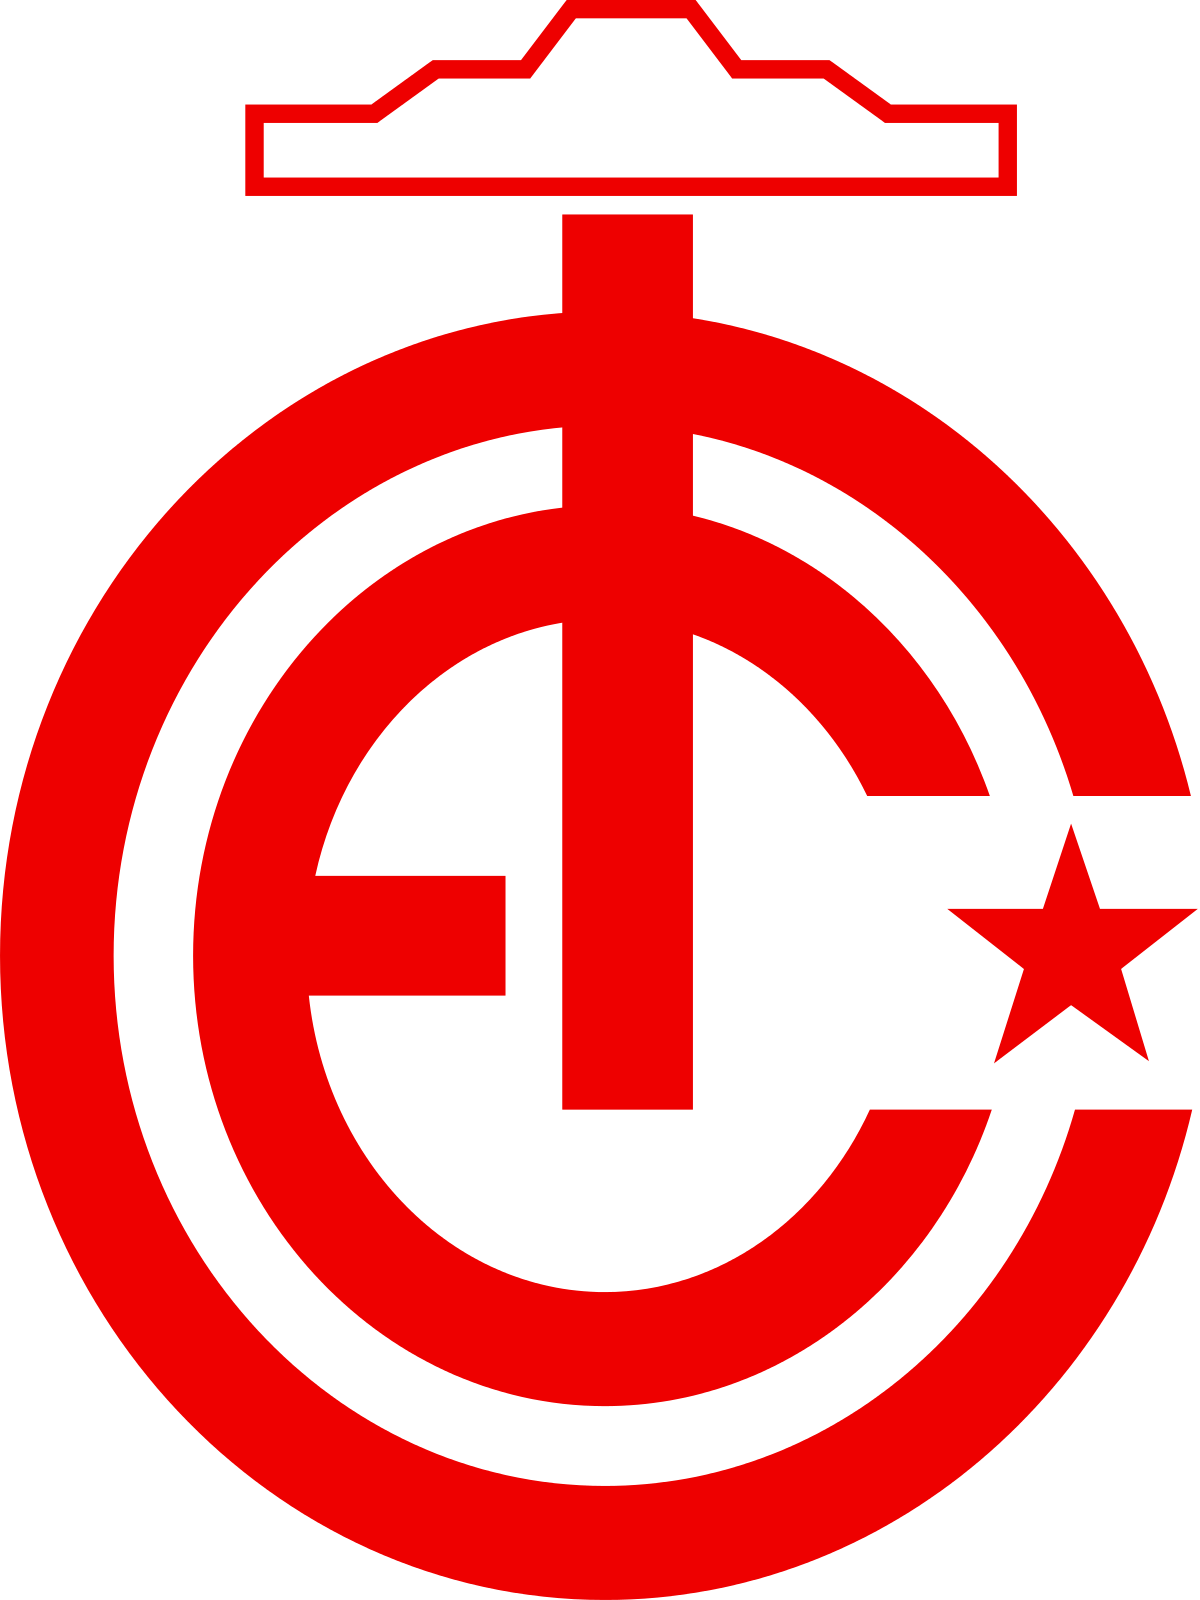 Gremio Prudente logo